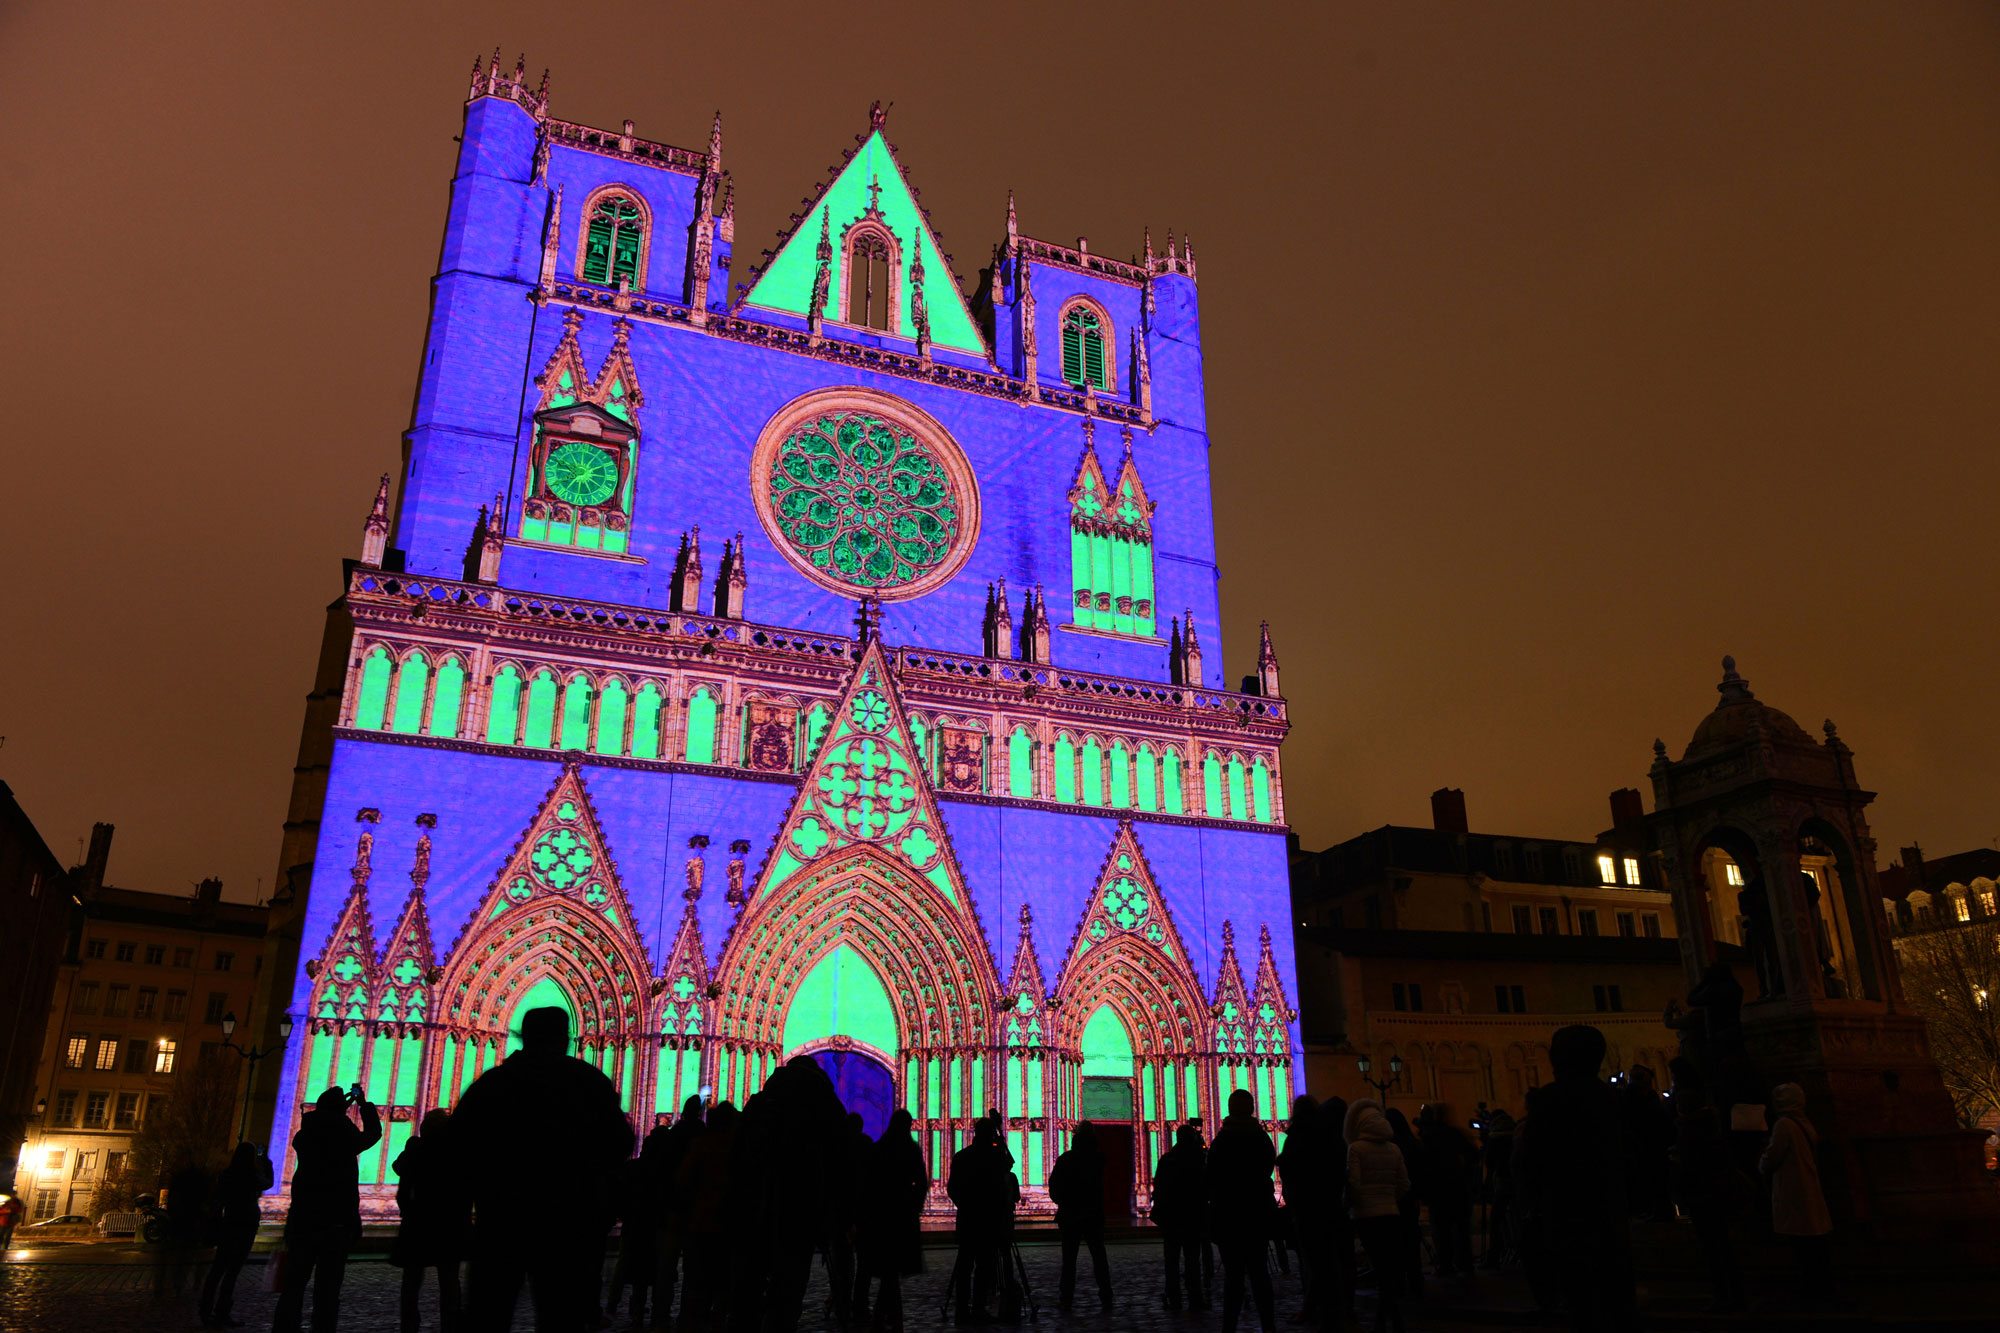 Duke væg Botanik Tradition and renewal: the Festival of Lights in Lyon